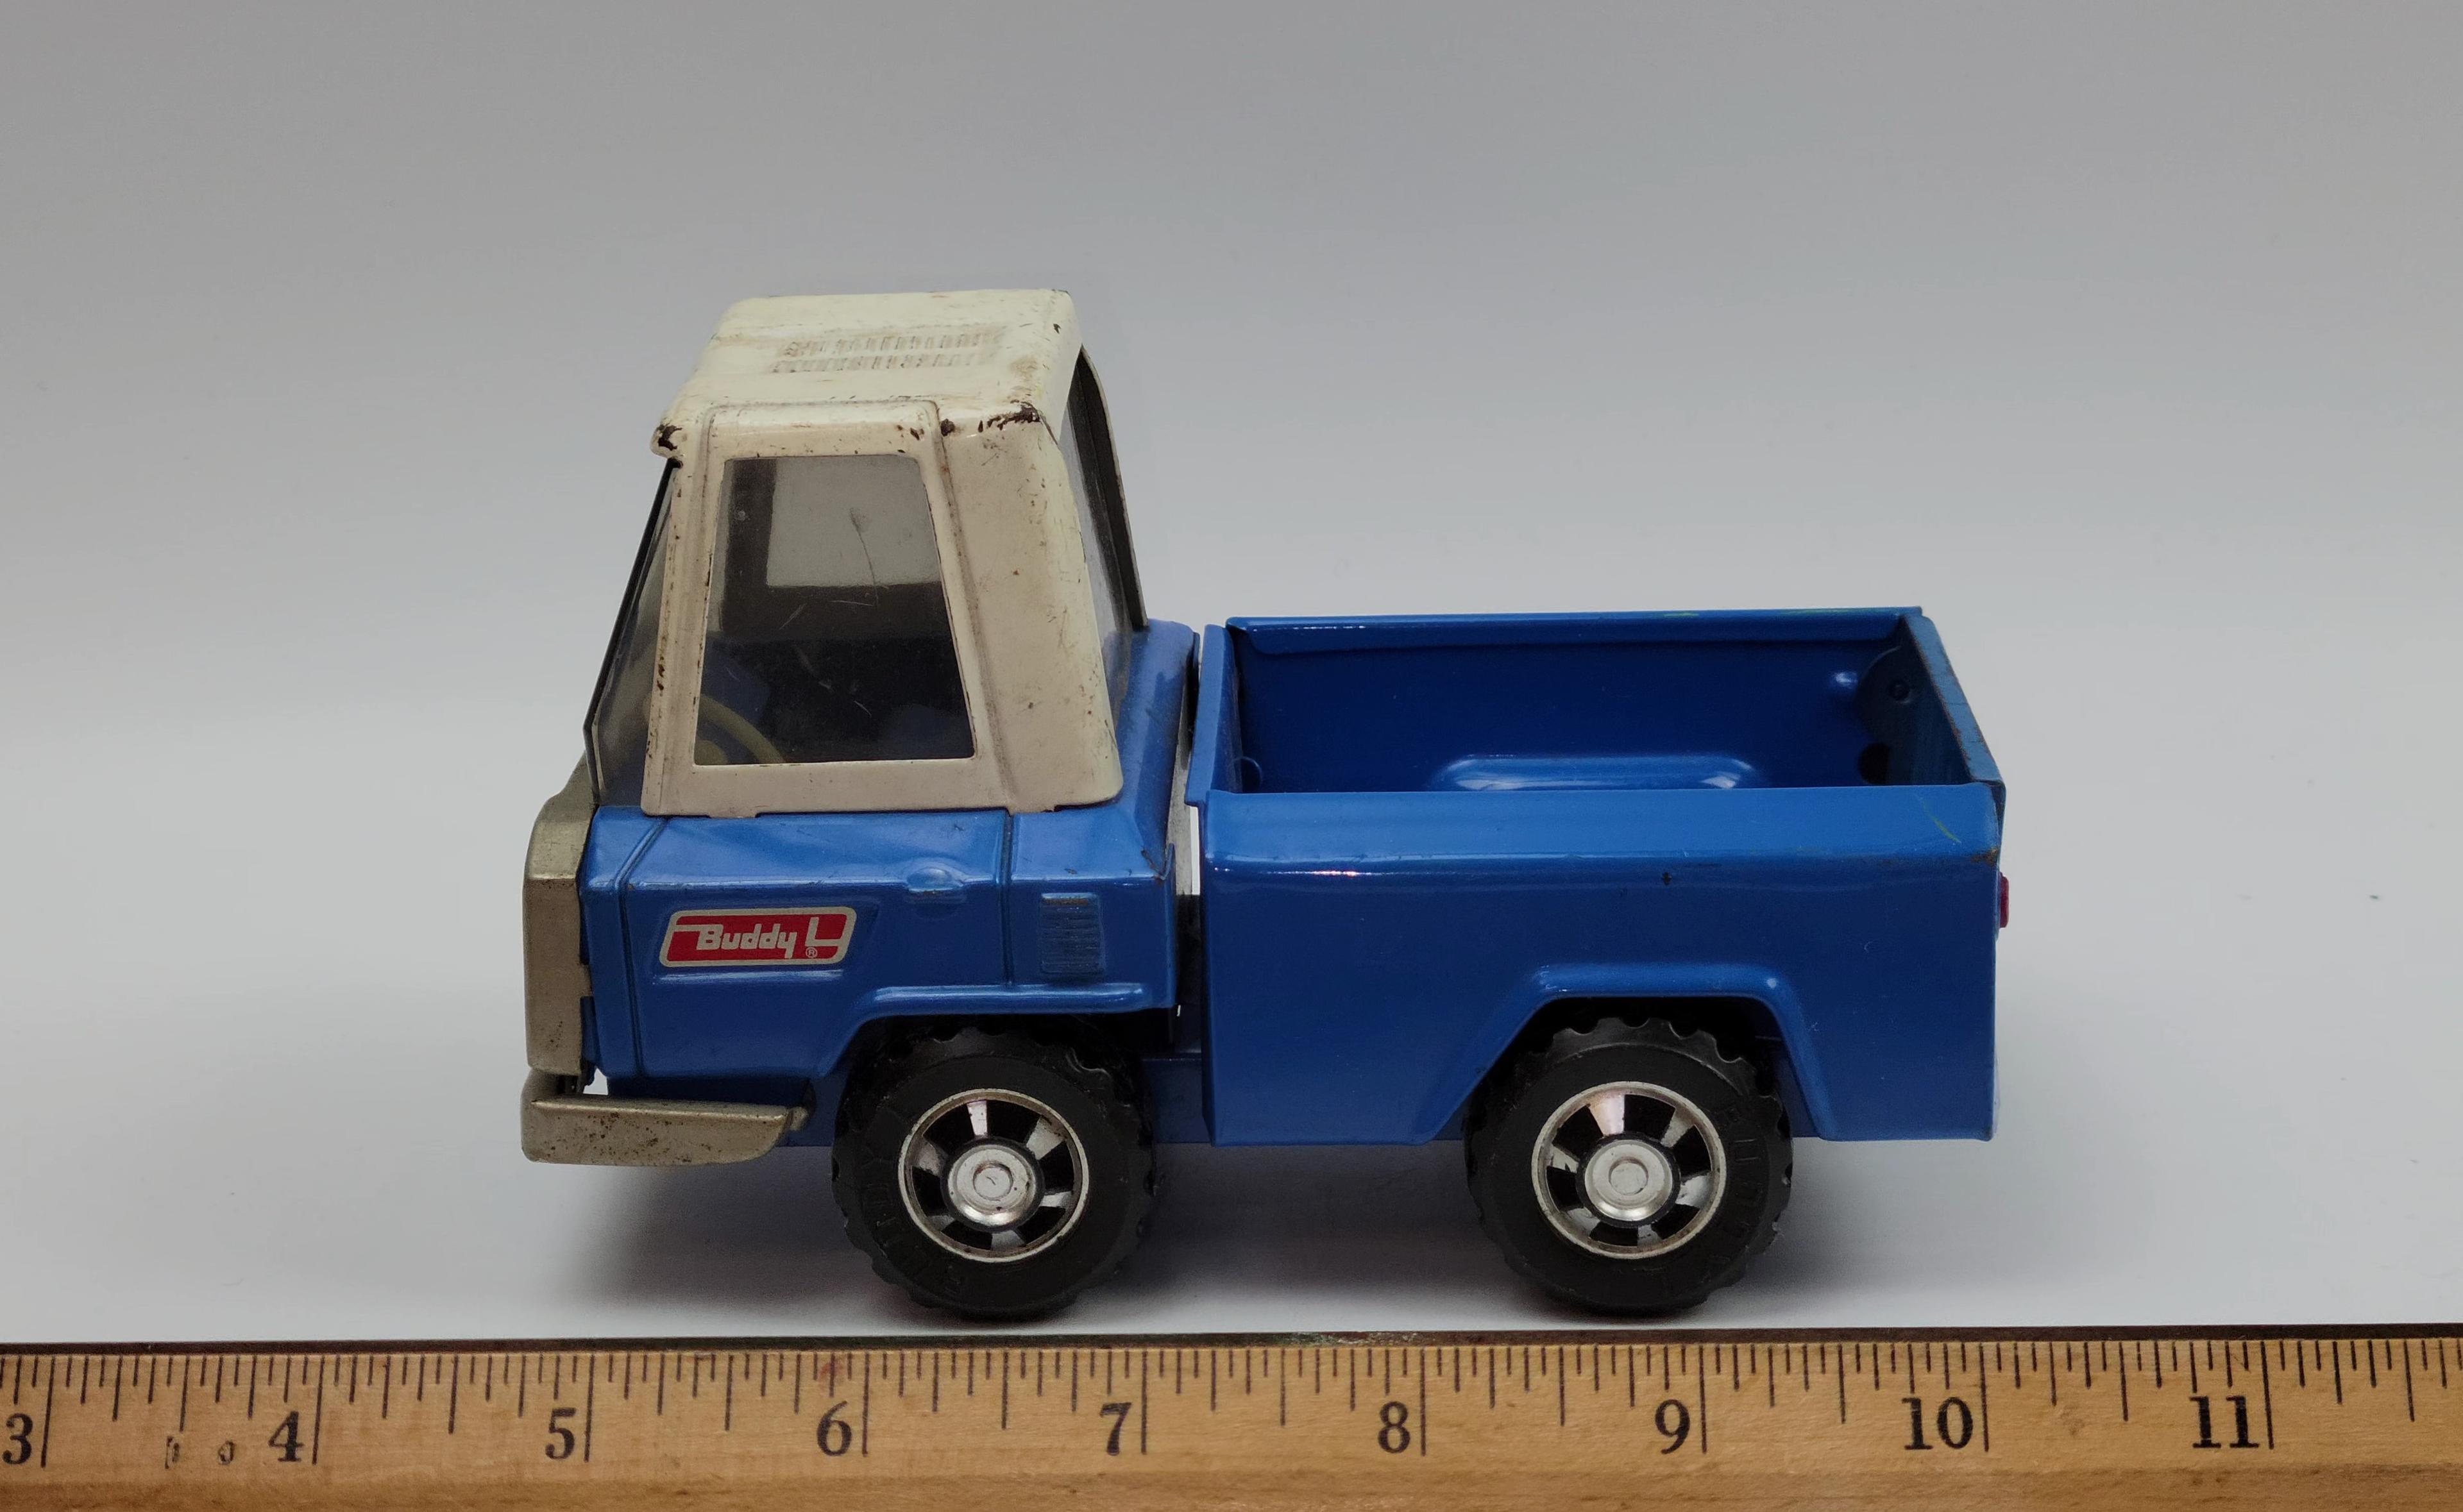 Buddy L Blue Pickup Truck Vintage Pressed Steel Toy Vehicle